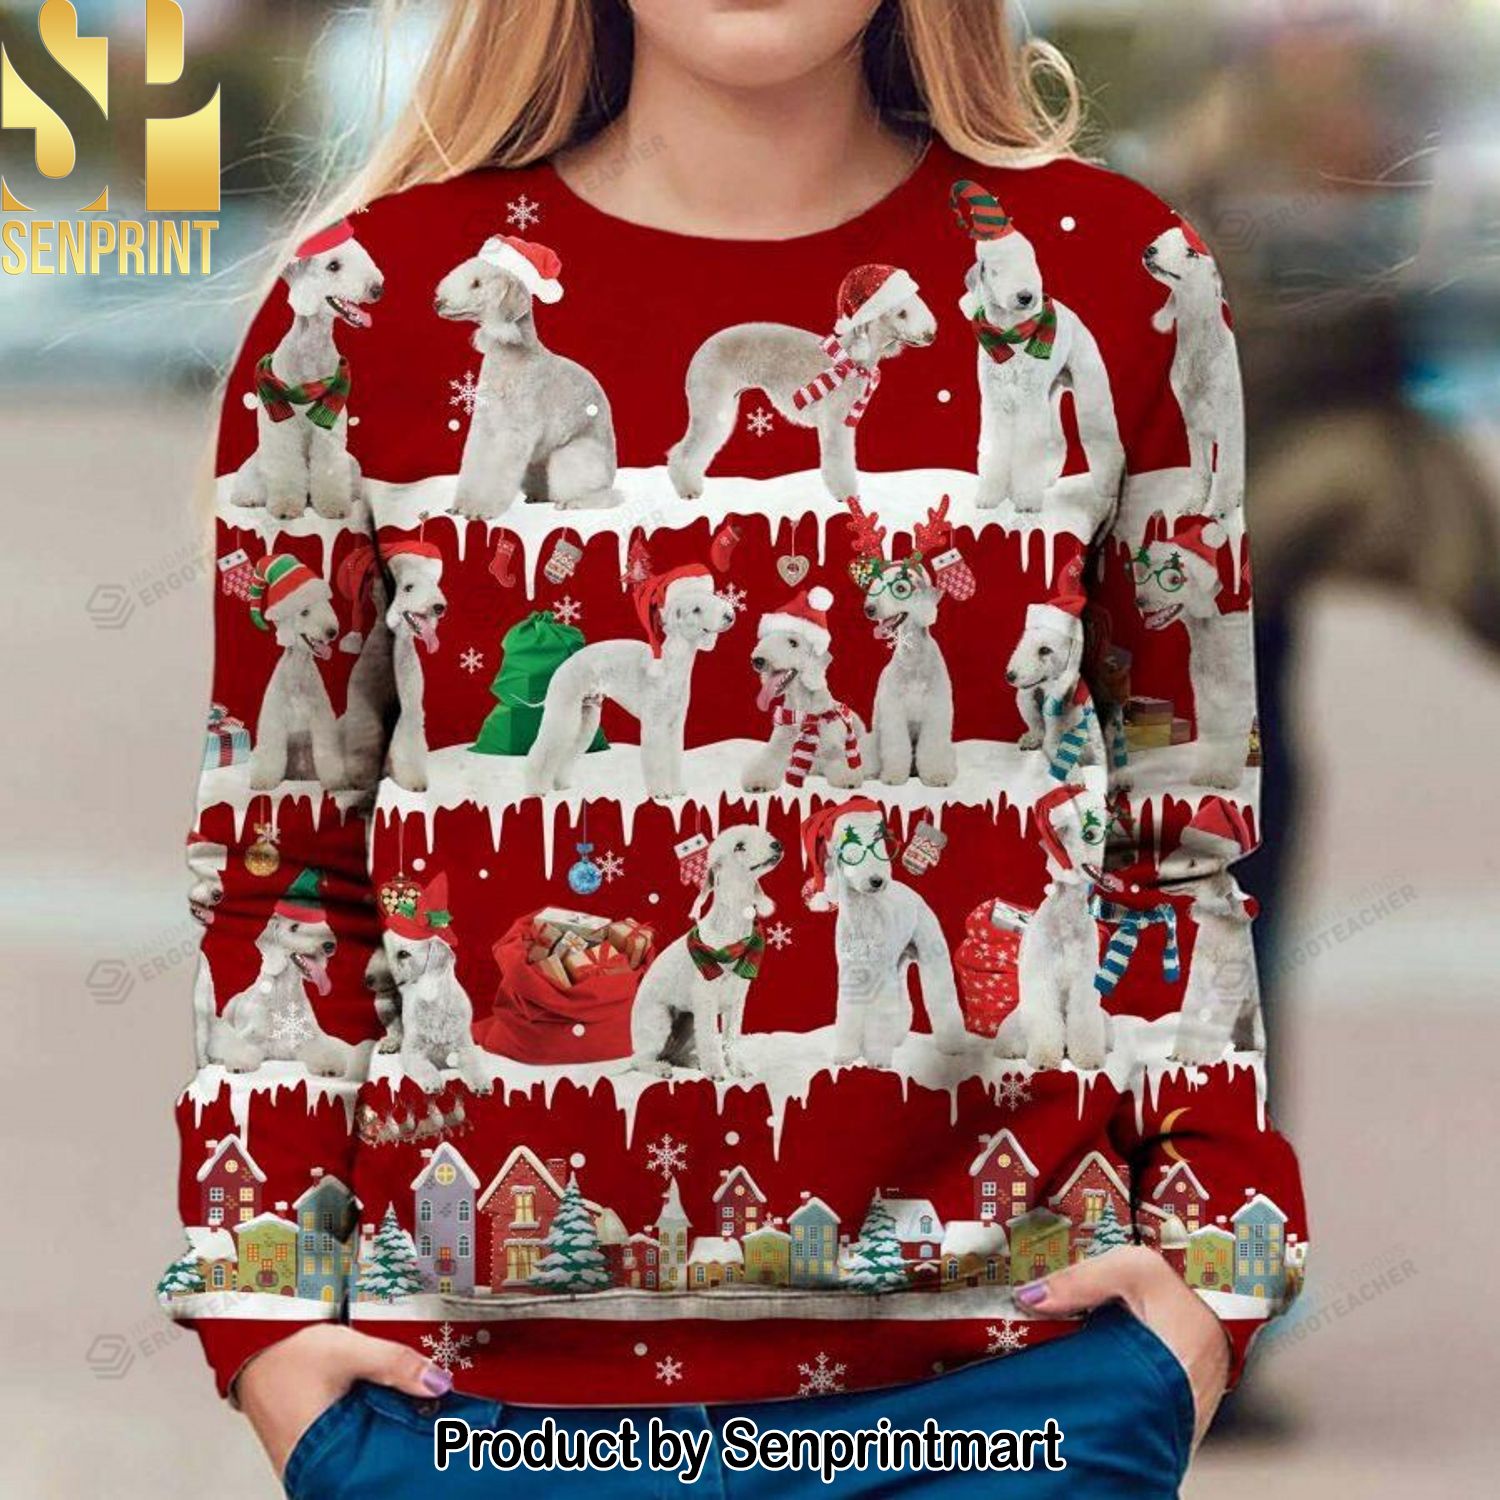 Bedlington Terrier Knitting Pattern 3D Print Ugly Sweater